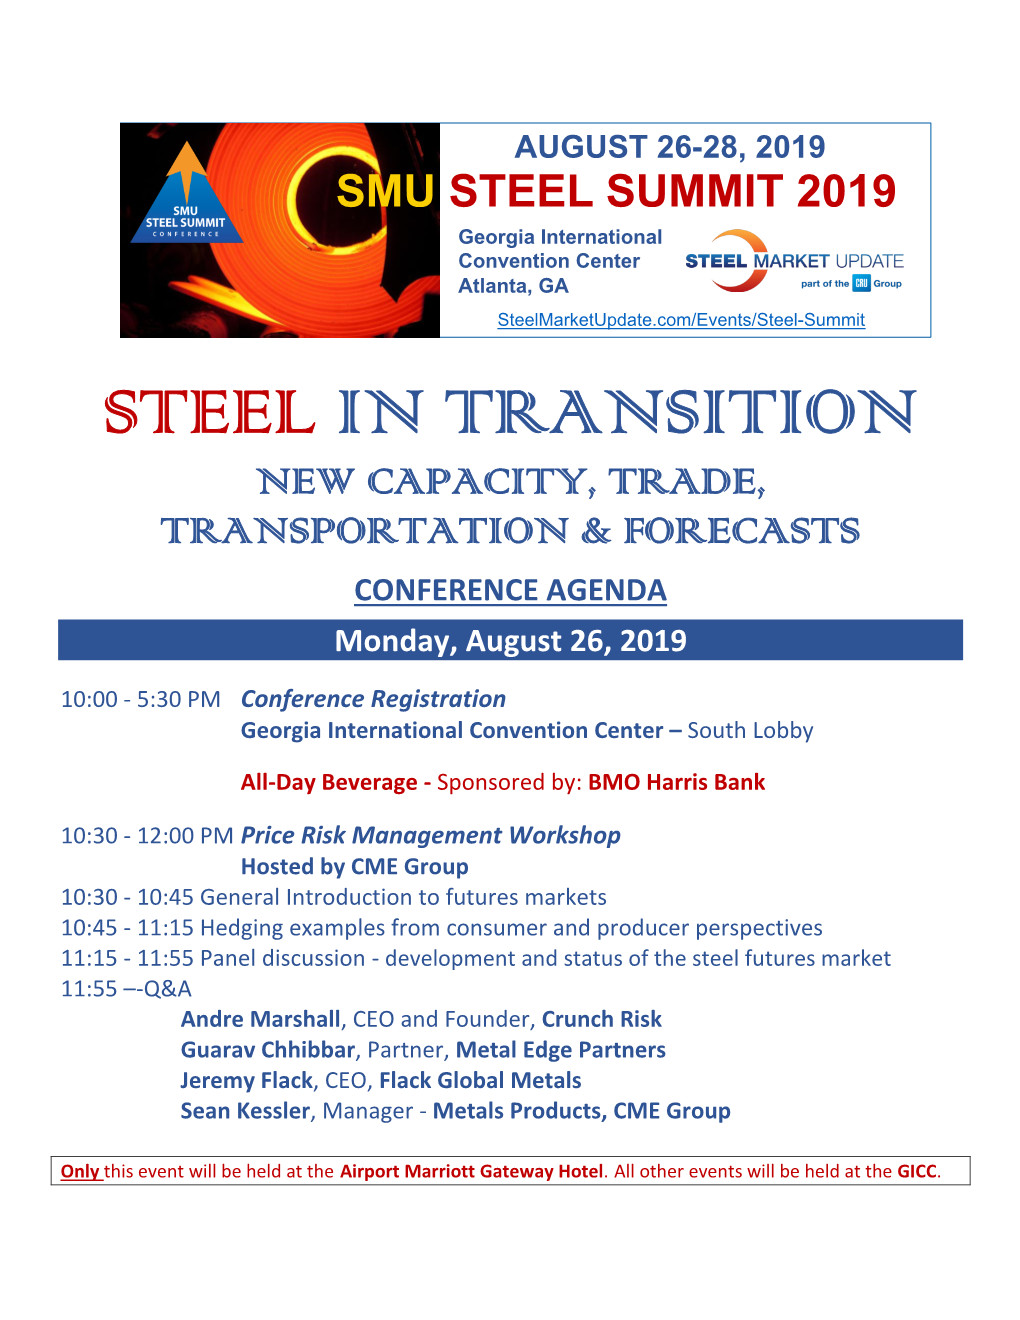 Steel in Transition New Capacity, Trade, Transportation & Forecasts